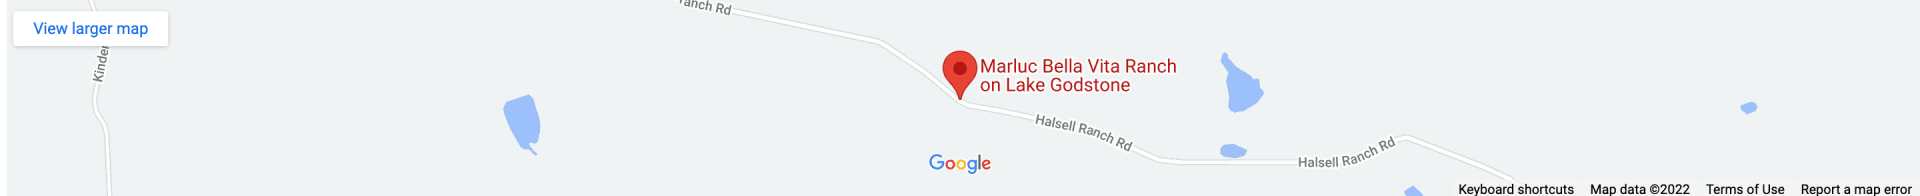 Google Map Location of Marluc Bella Vita Ranch at Lake Godstone